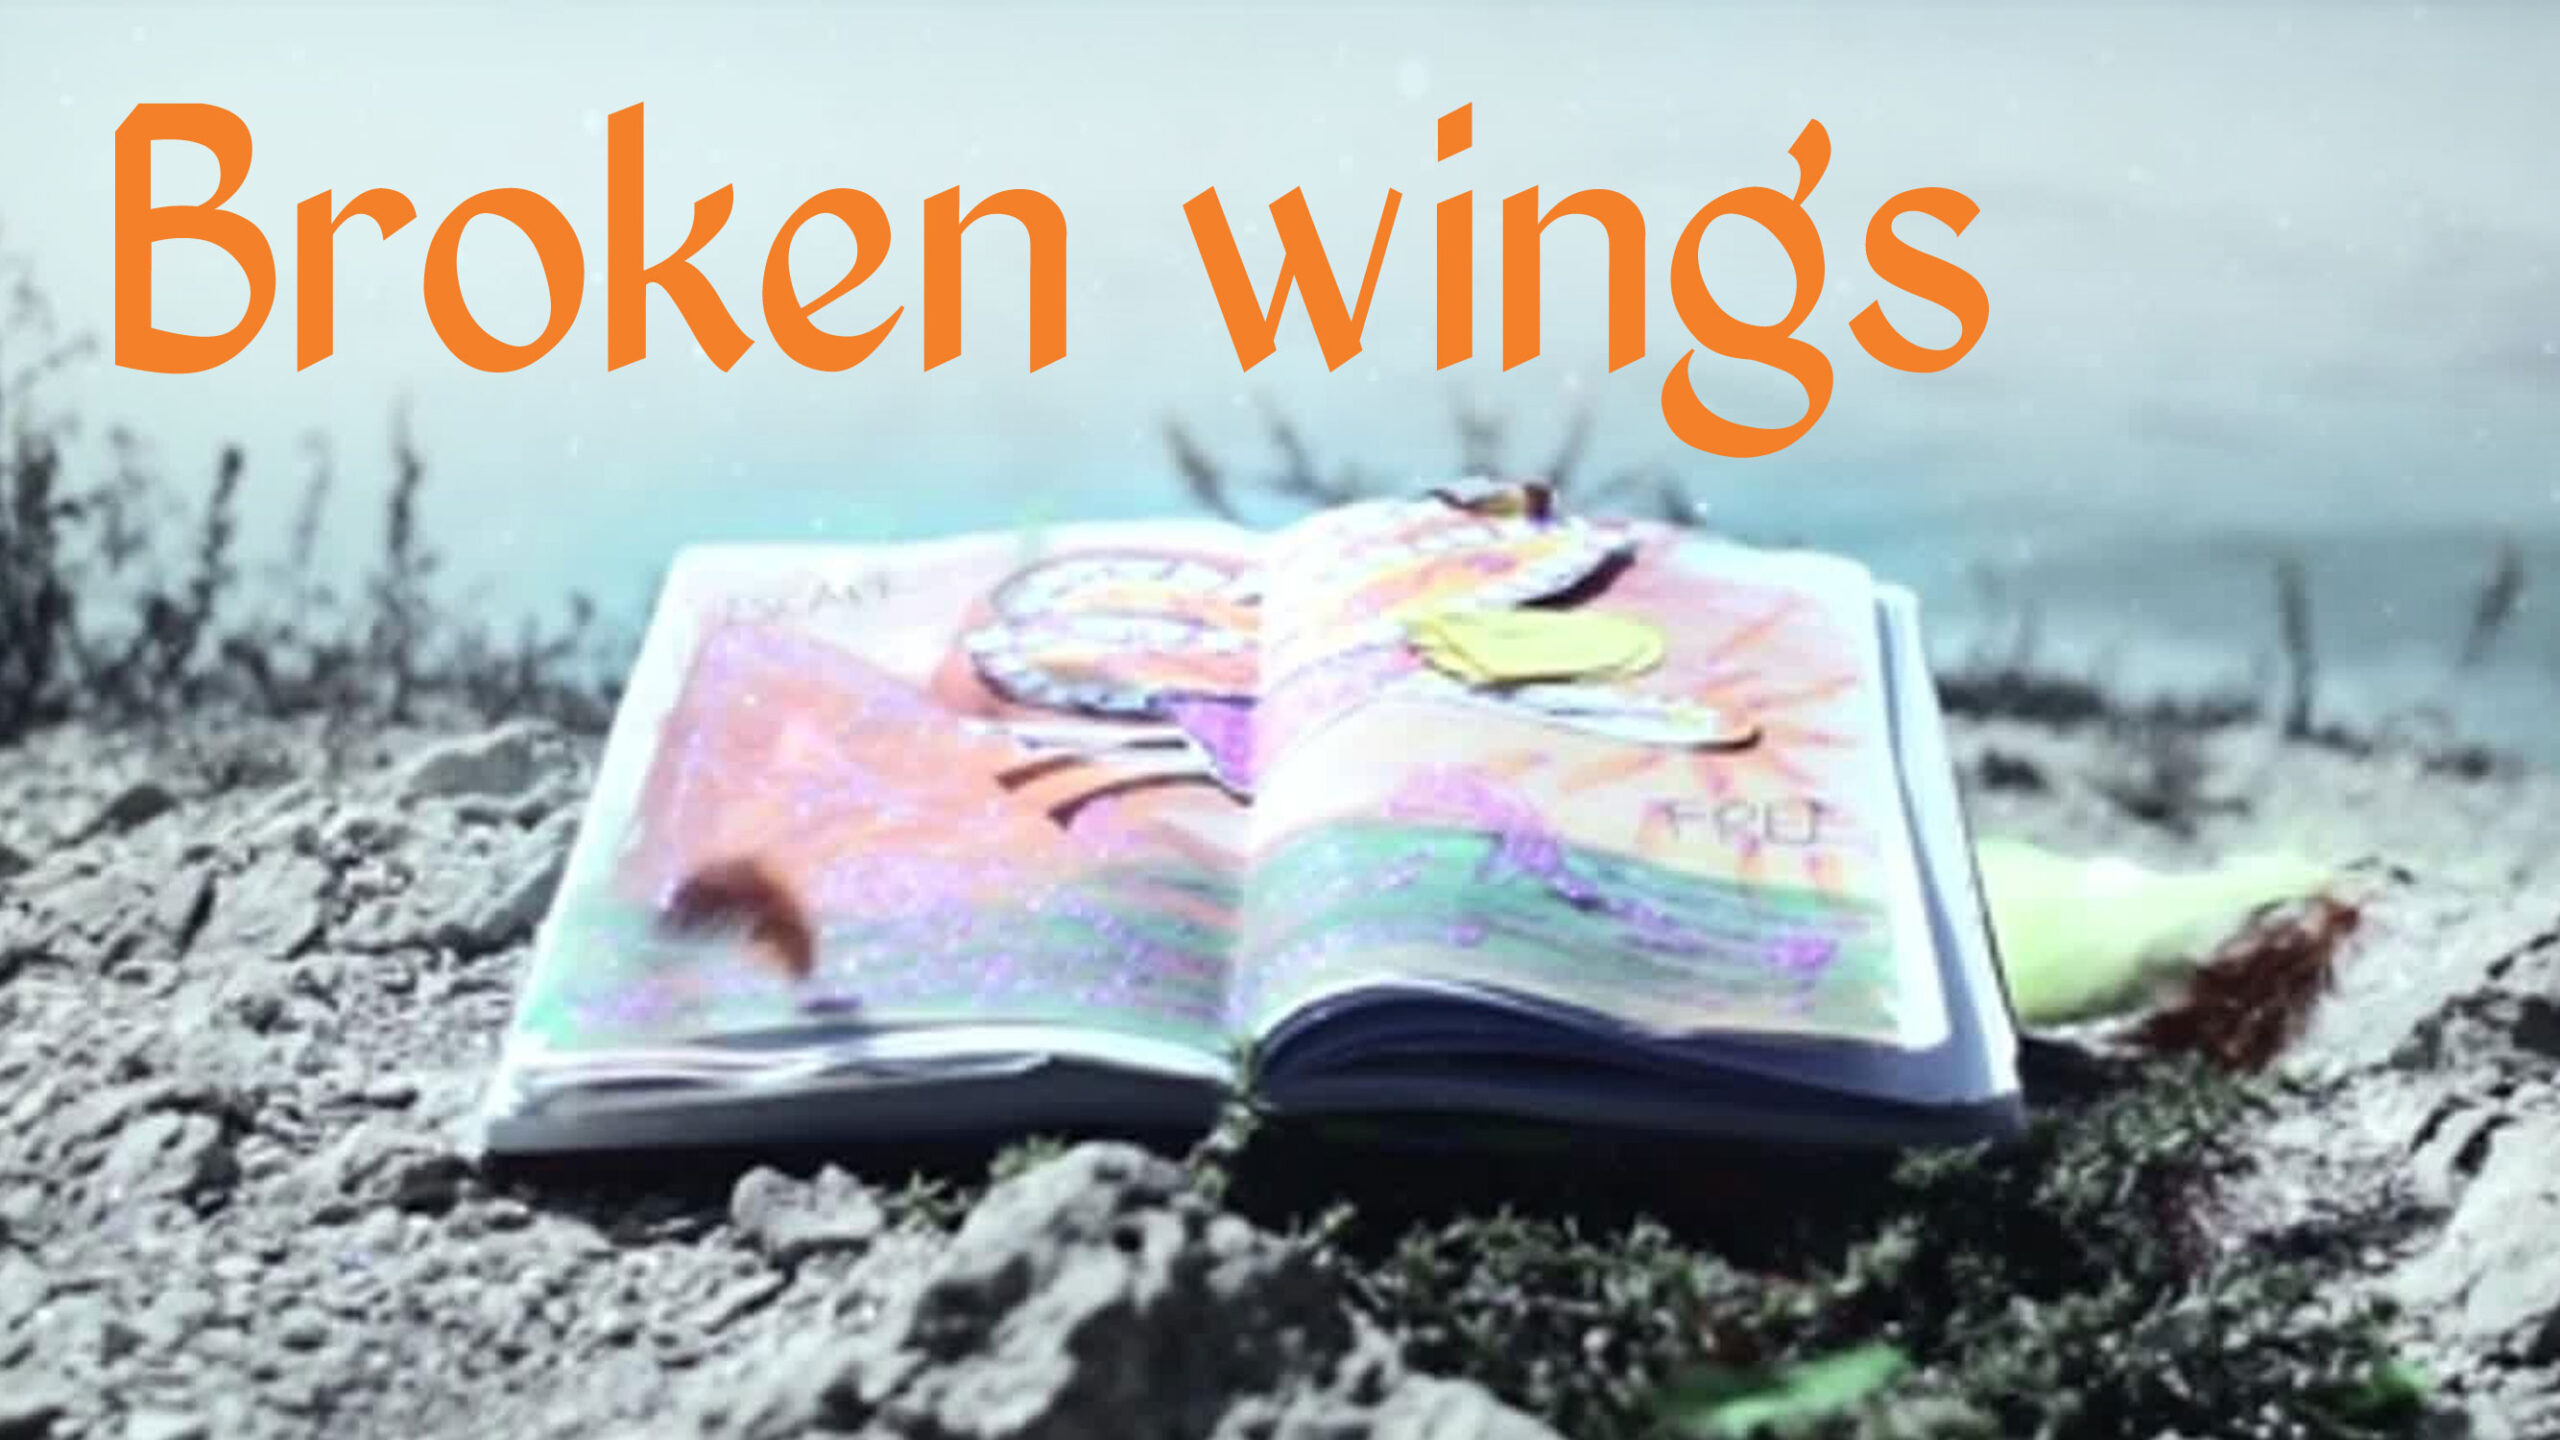 Watch Broken wings